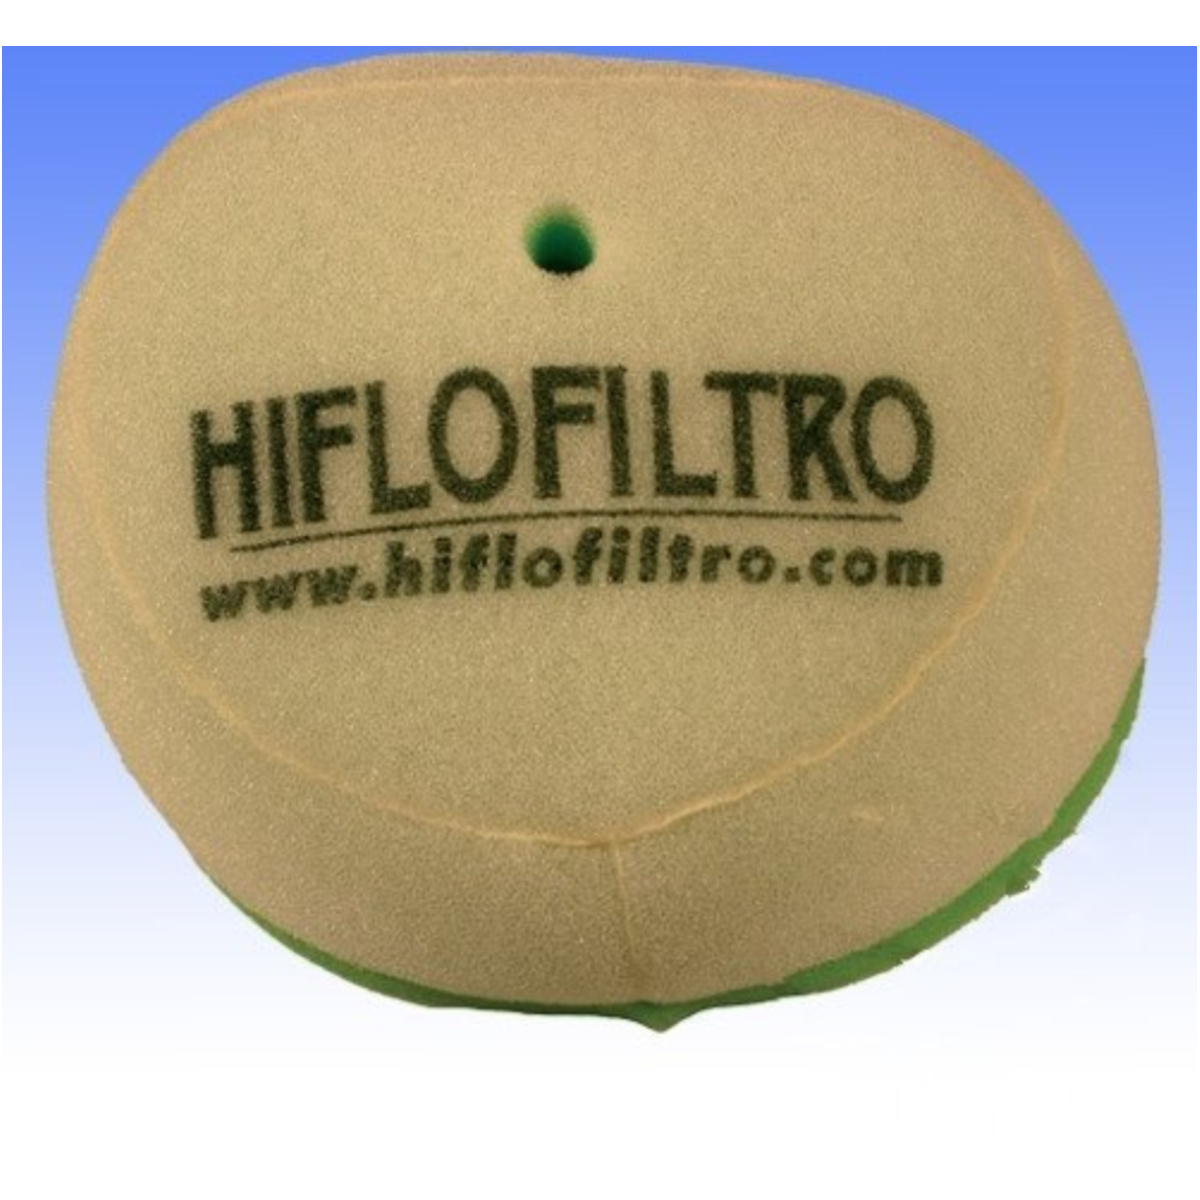 Hiflo hff1011 luftfilter foam hiflo von HIFLO